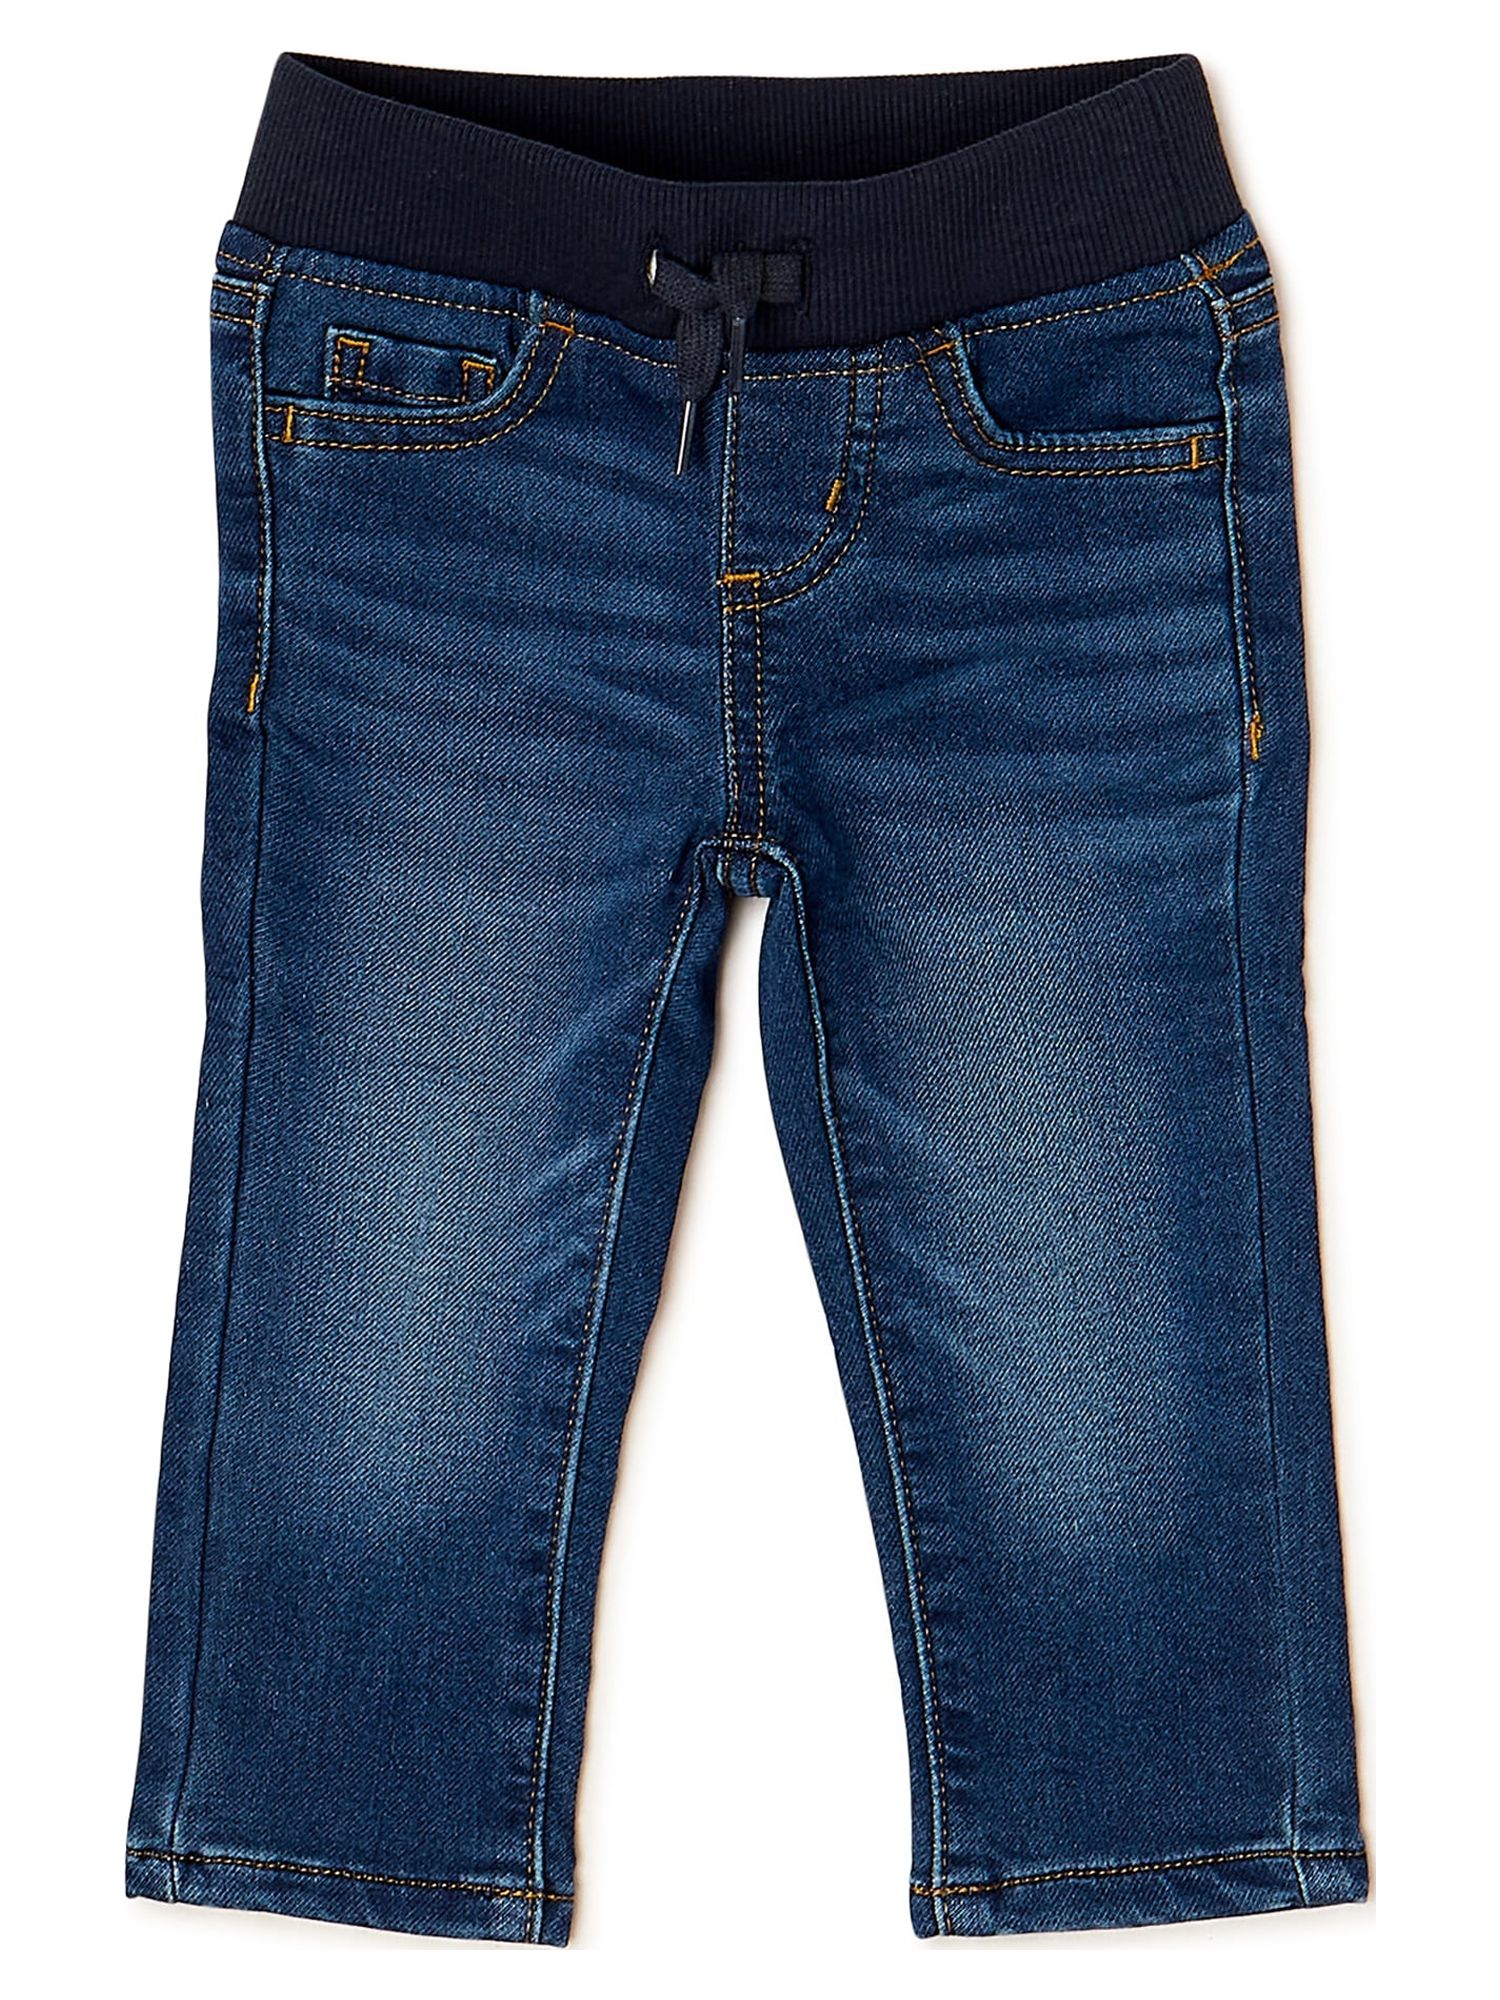 Wonder Nation Toddler Boys Knit Denim Jeans, Sizes 12M-5T - Walmart.com